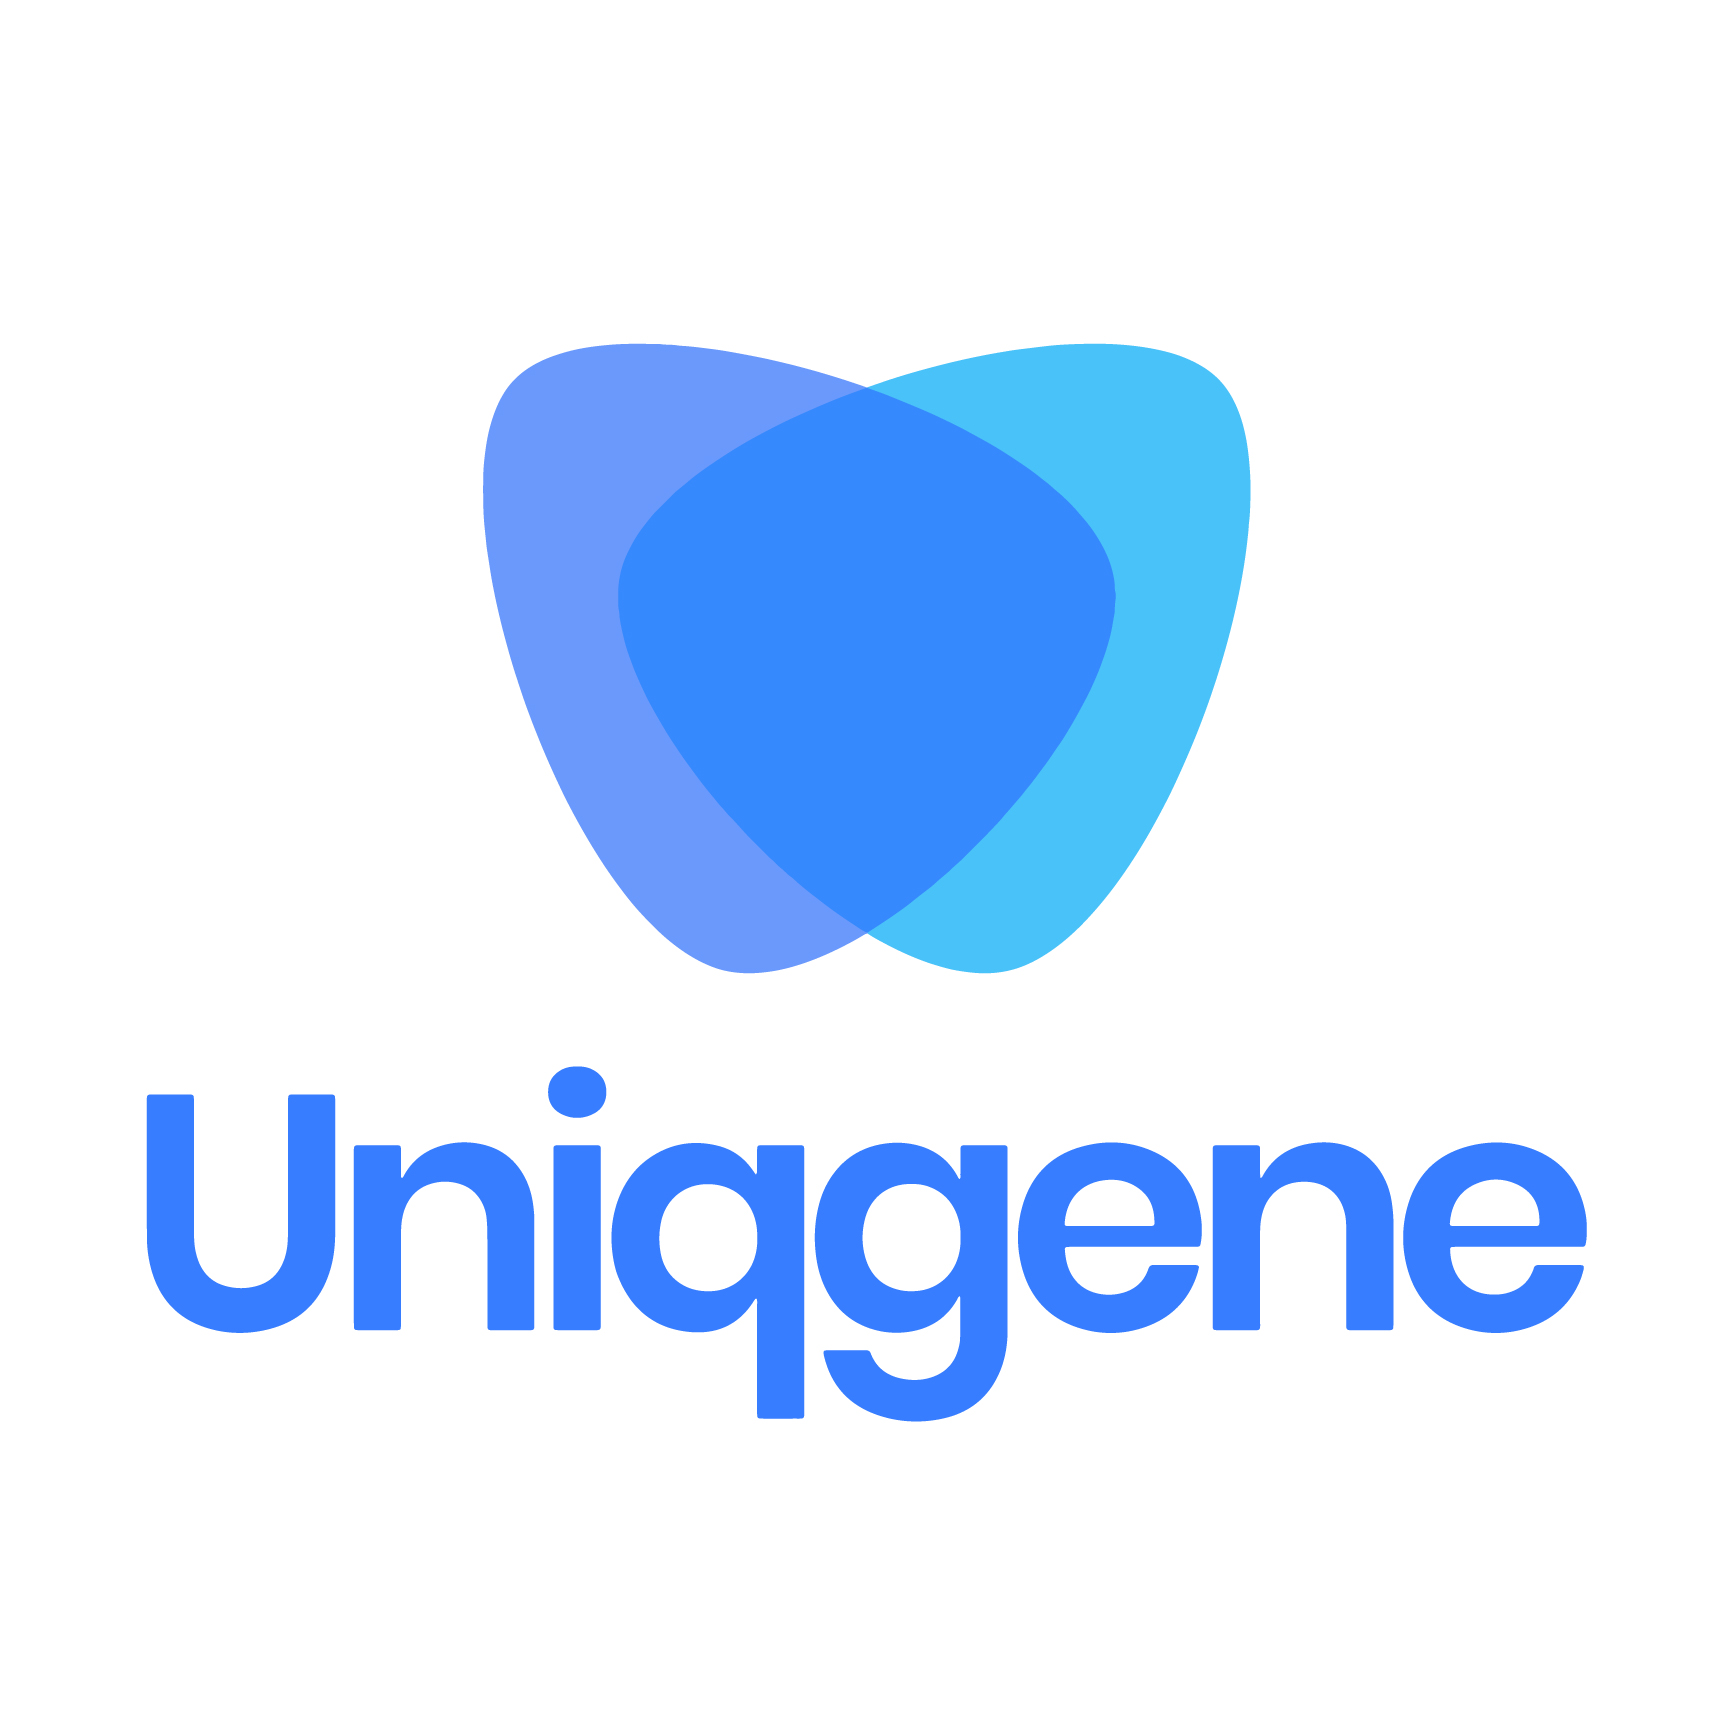 Uniqgene